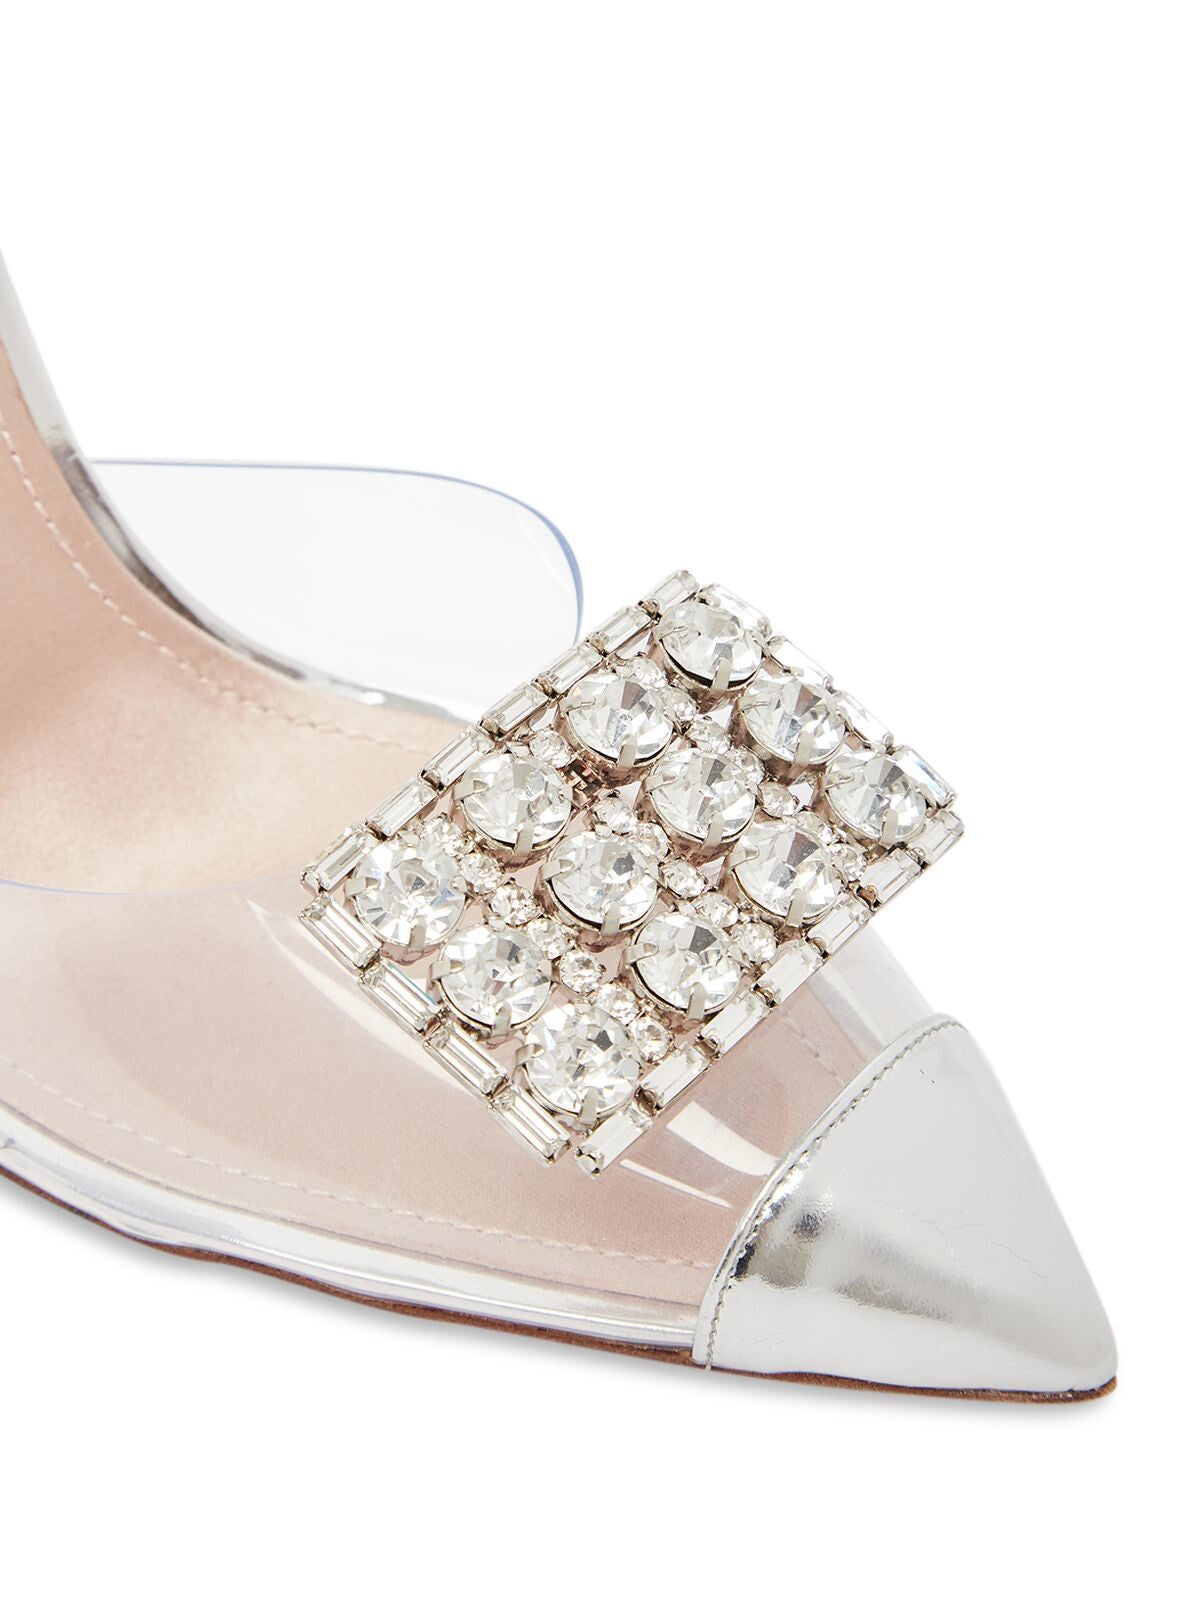 GIAMBATTISTA VALLI Womens Silver Embellished Pointed Toe Stiletto Buckle Leather Dress Slingback Sandal 38